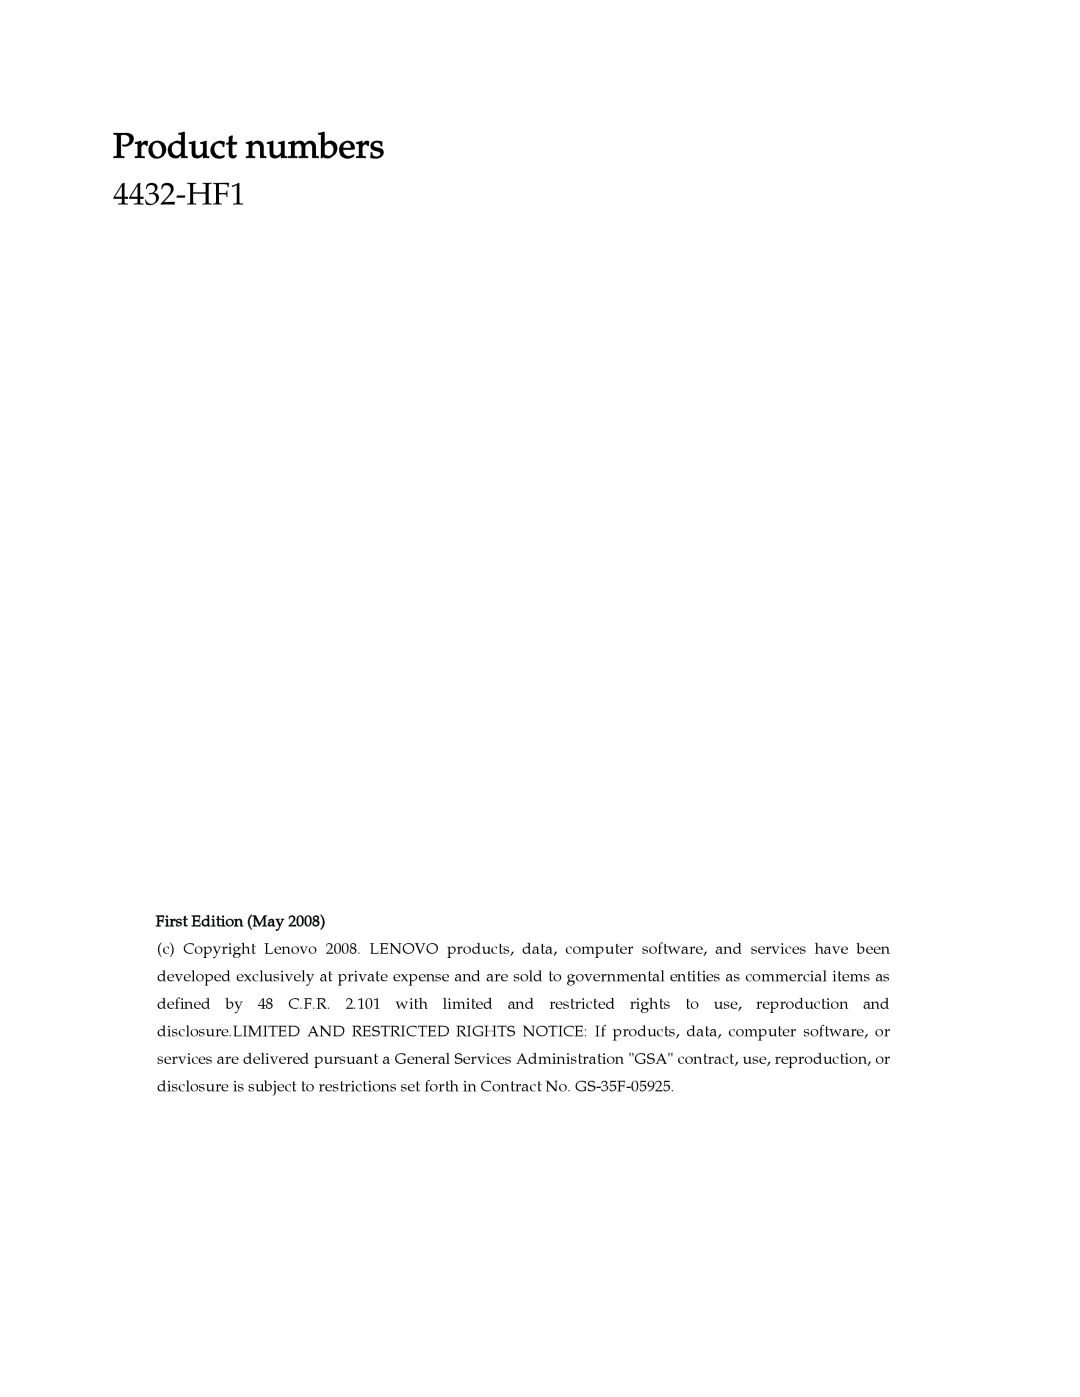 Lenovo 4432-HF1 manual Product numbers 